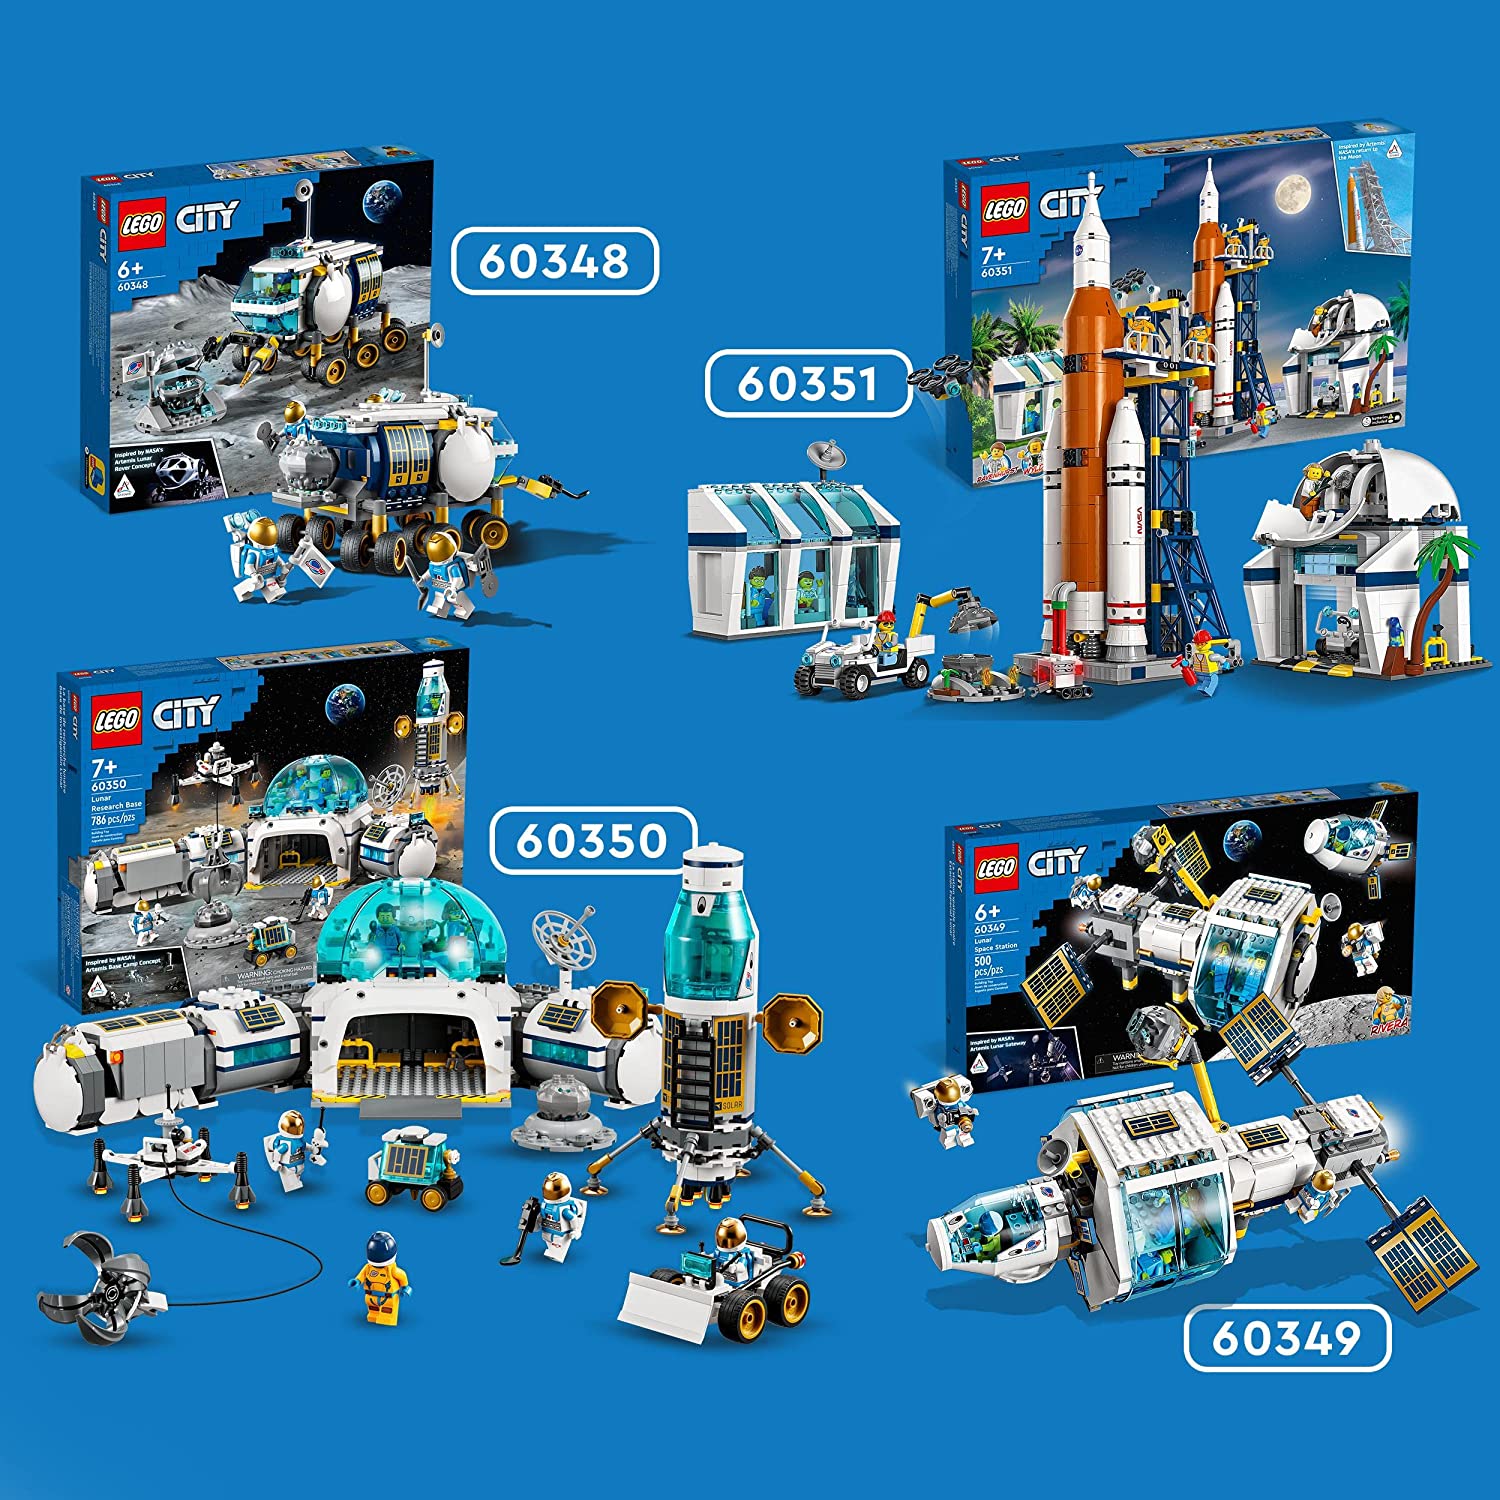 LEGO 60348 City Månbil Rymdskepp, Modellbyggsats, Rymdleksak